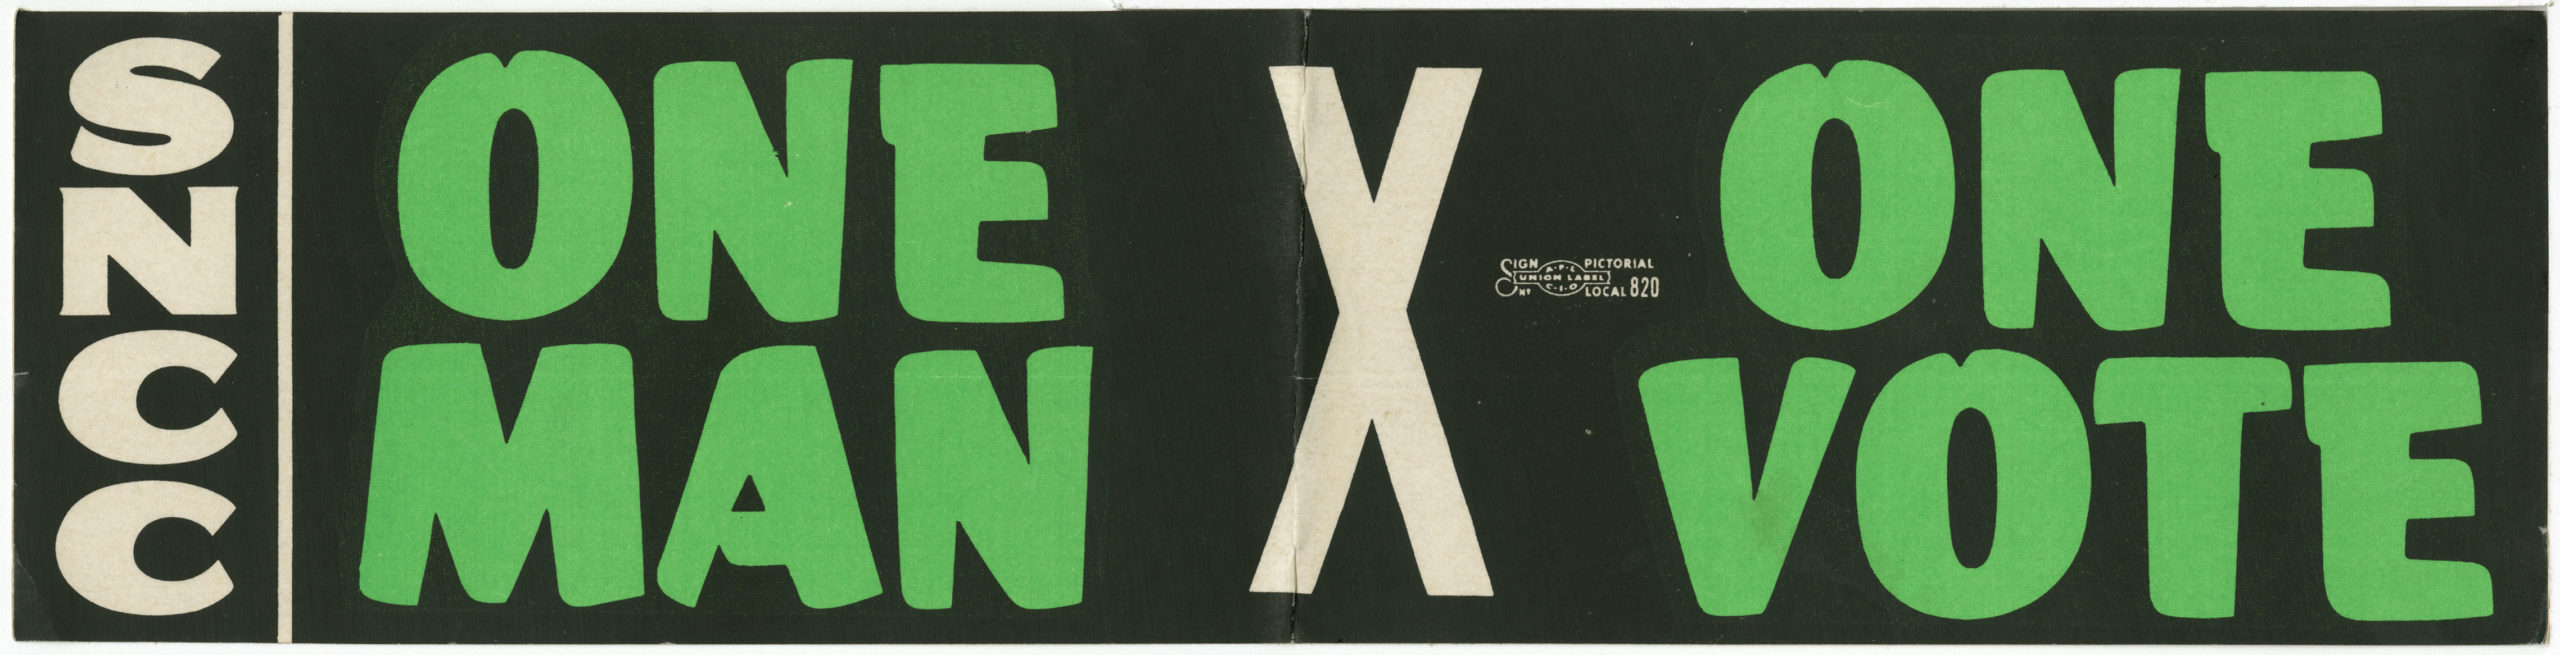 One Man One Vote bumper sticker,Student Nonviolent Coordinating Committee (U.S.),circa 1960,SNCC Vertical File